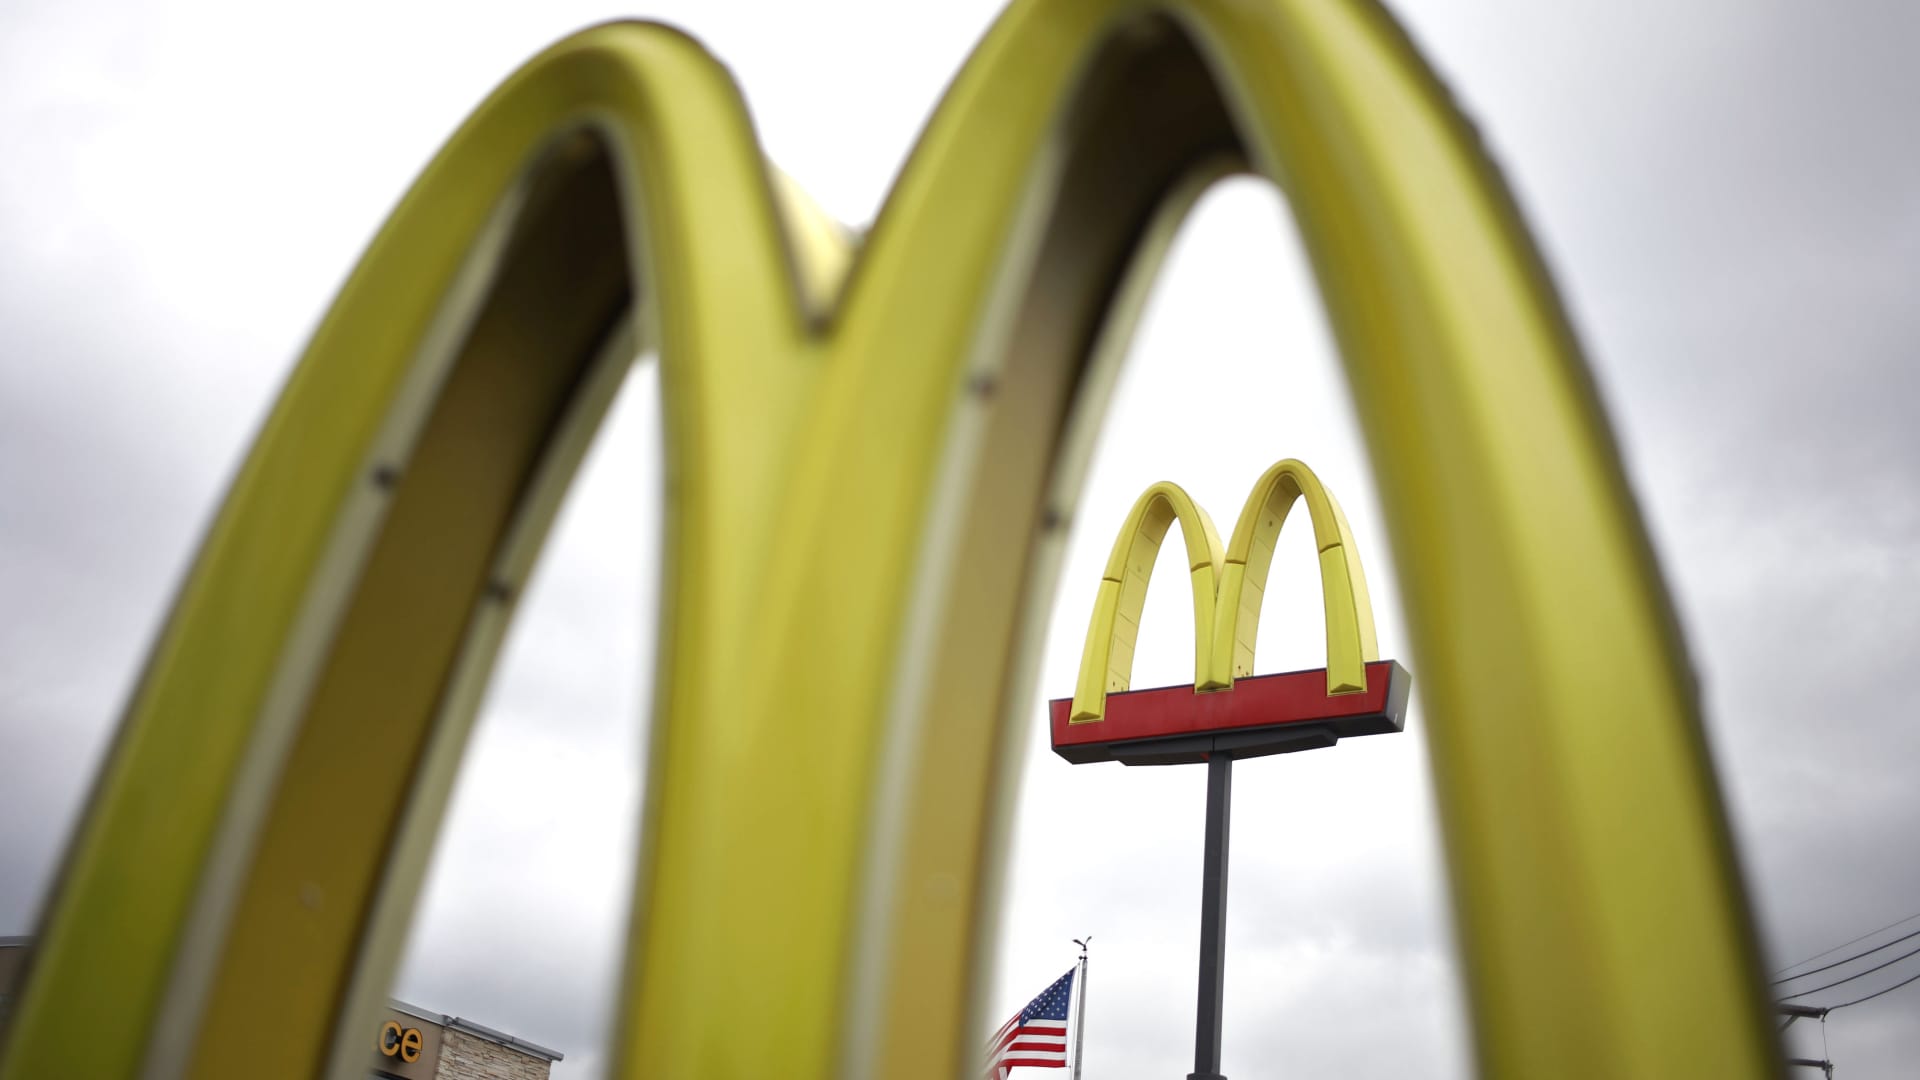 McDonald’s shareholders vote on Carl Icahn proxy struggle over animal welfare